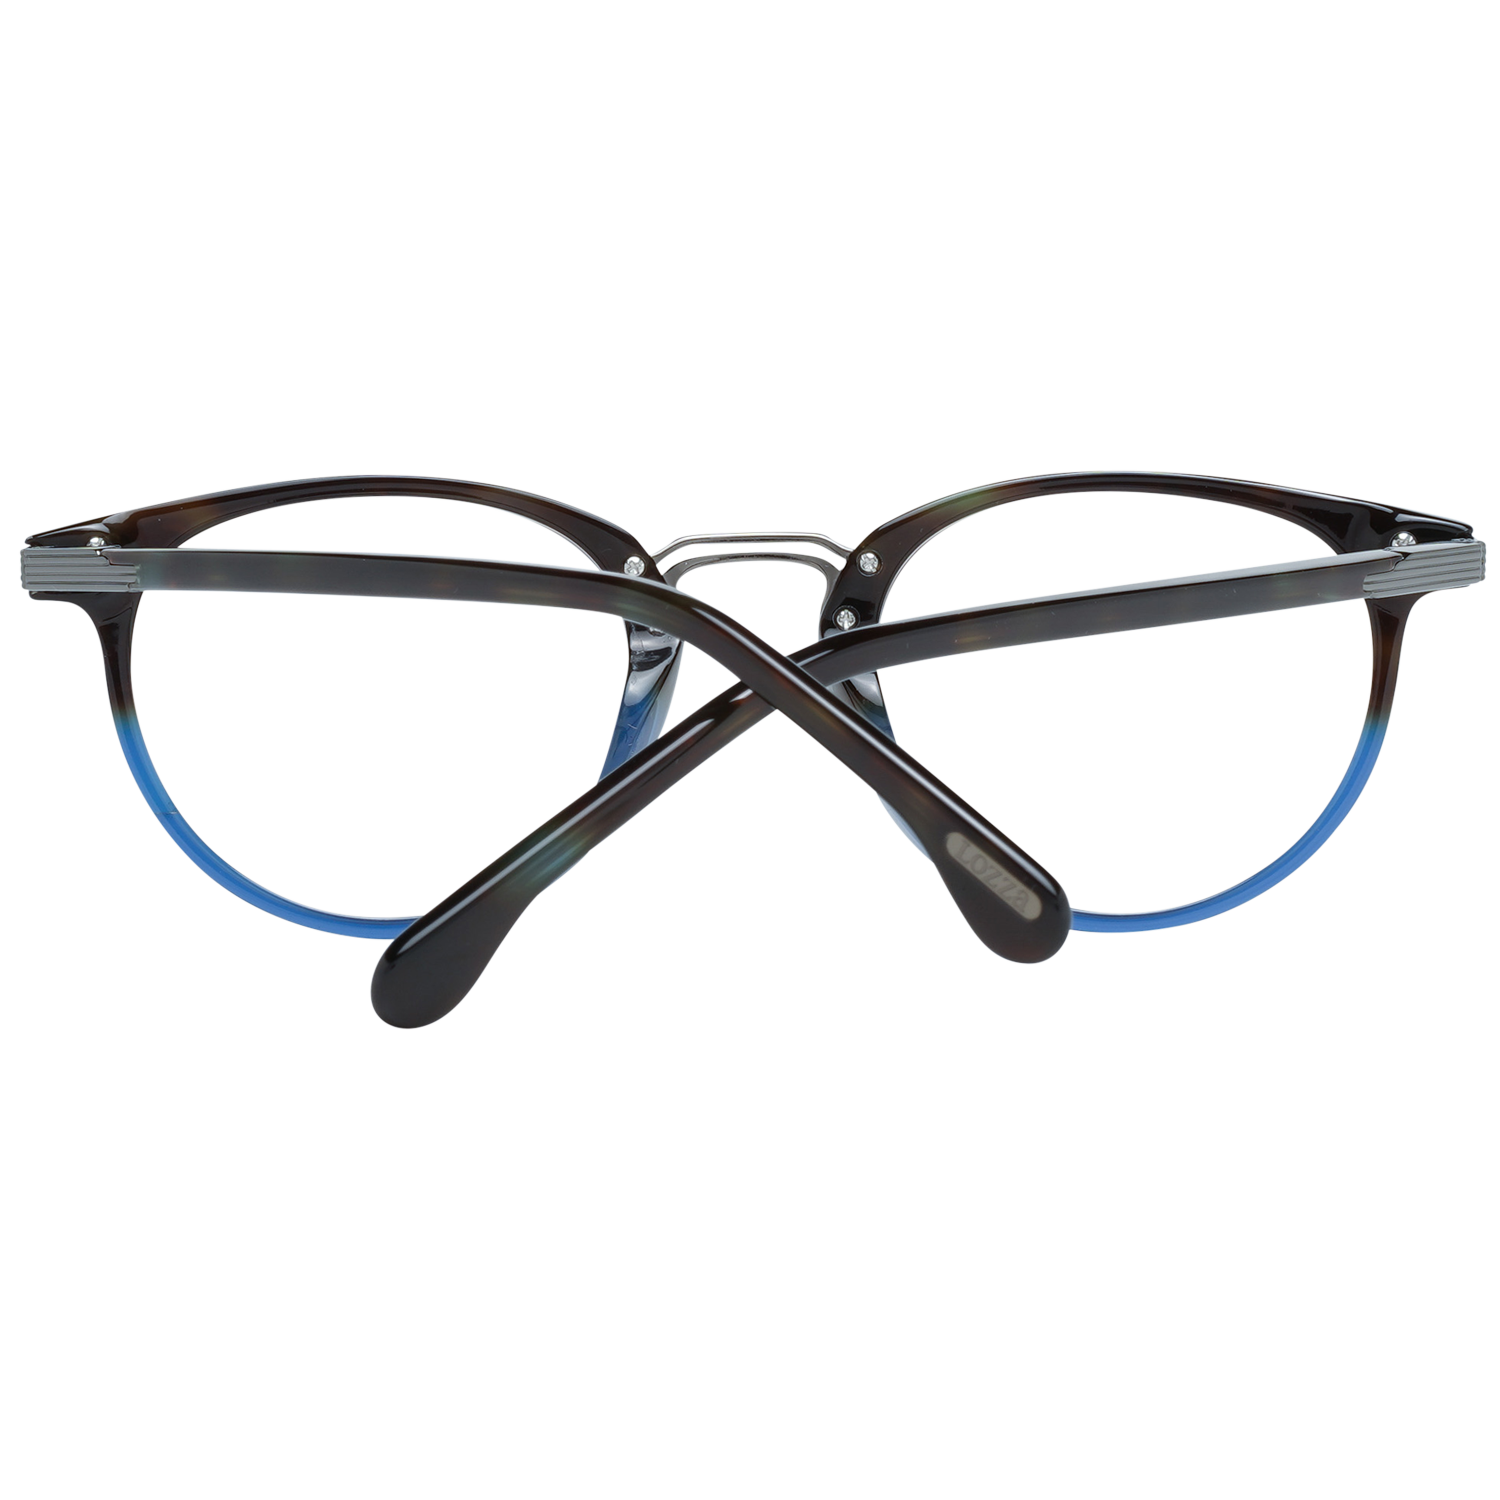 Lozza Frames Lozza Optical Frame VL4098 07TW 48 Eyeglasses Eyewear UK USA Australia 